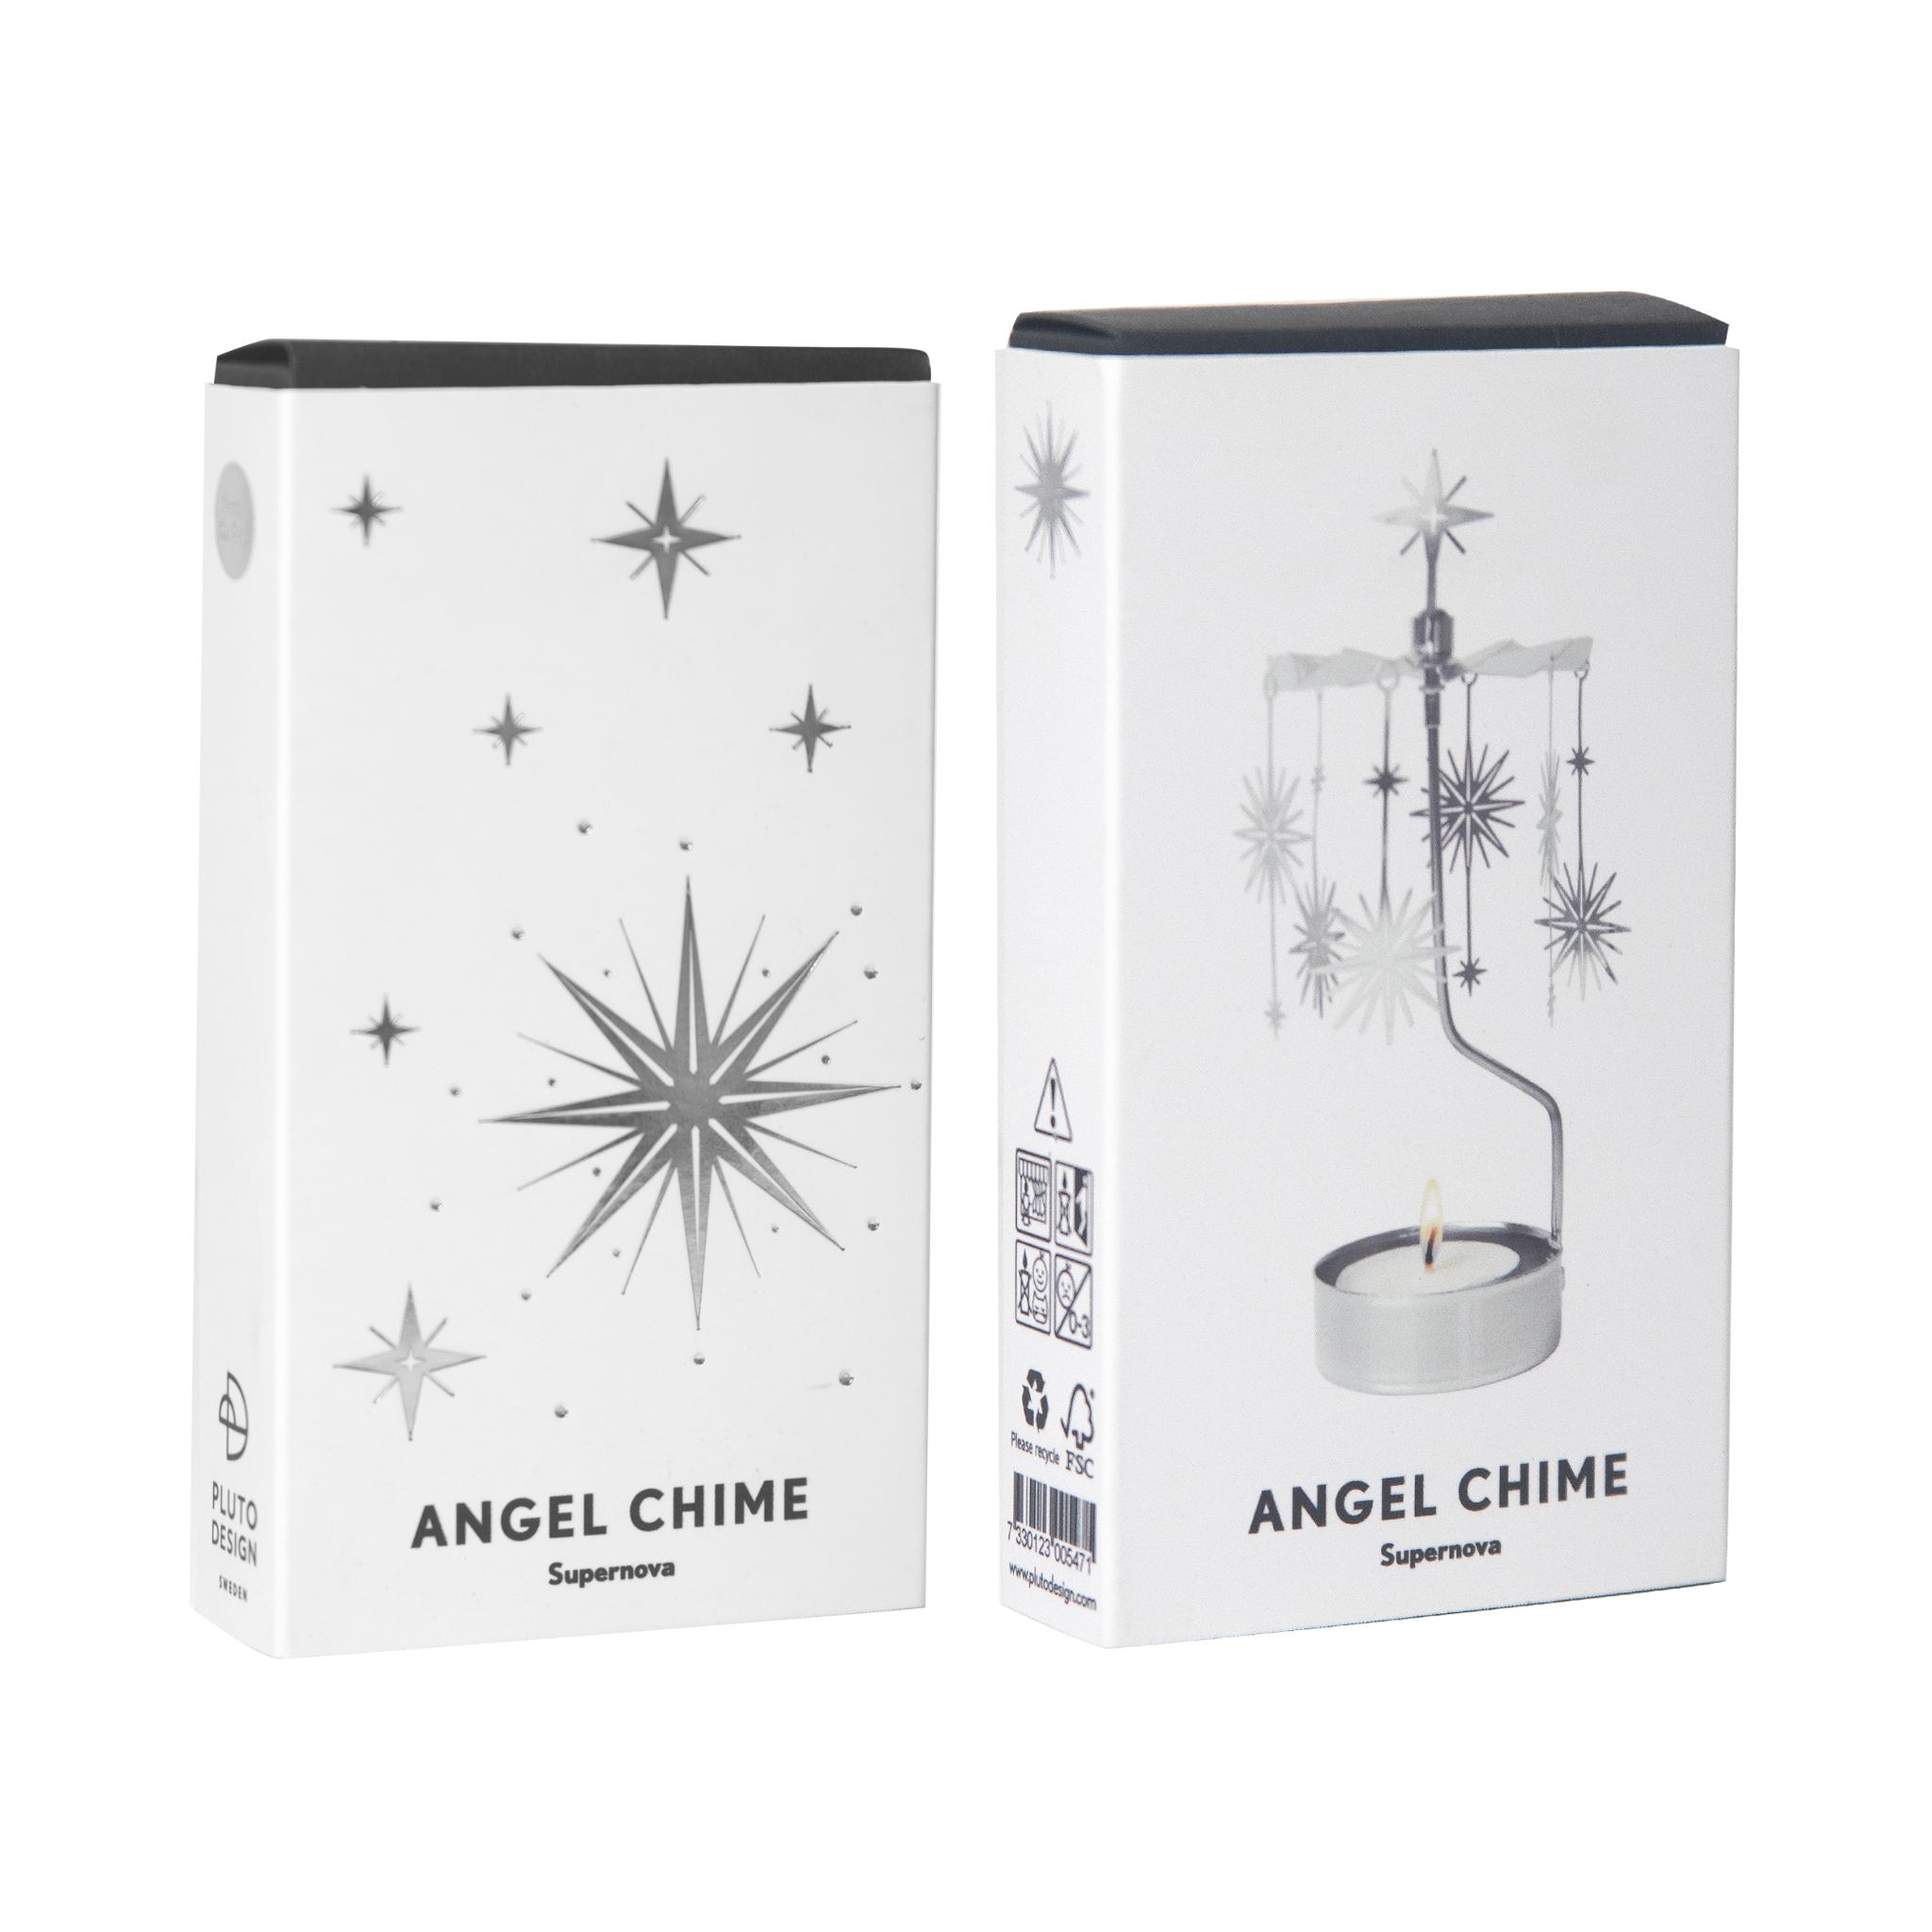 angel chime supernova box